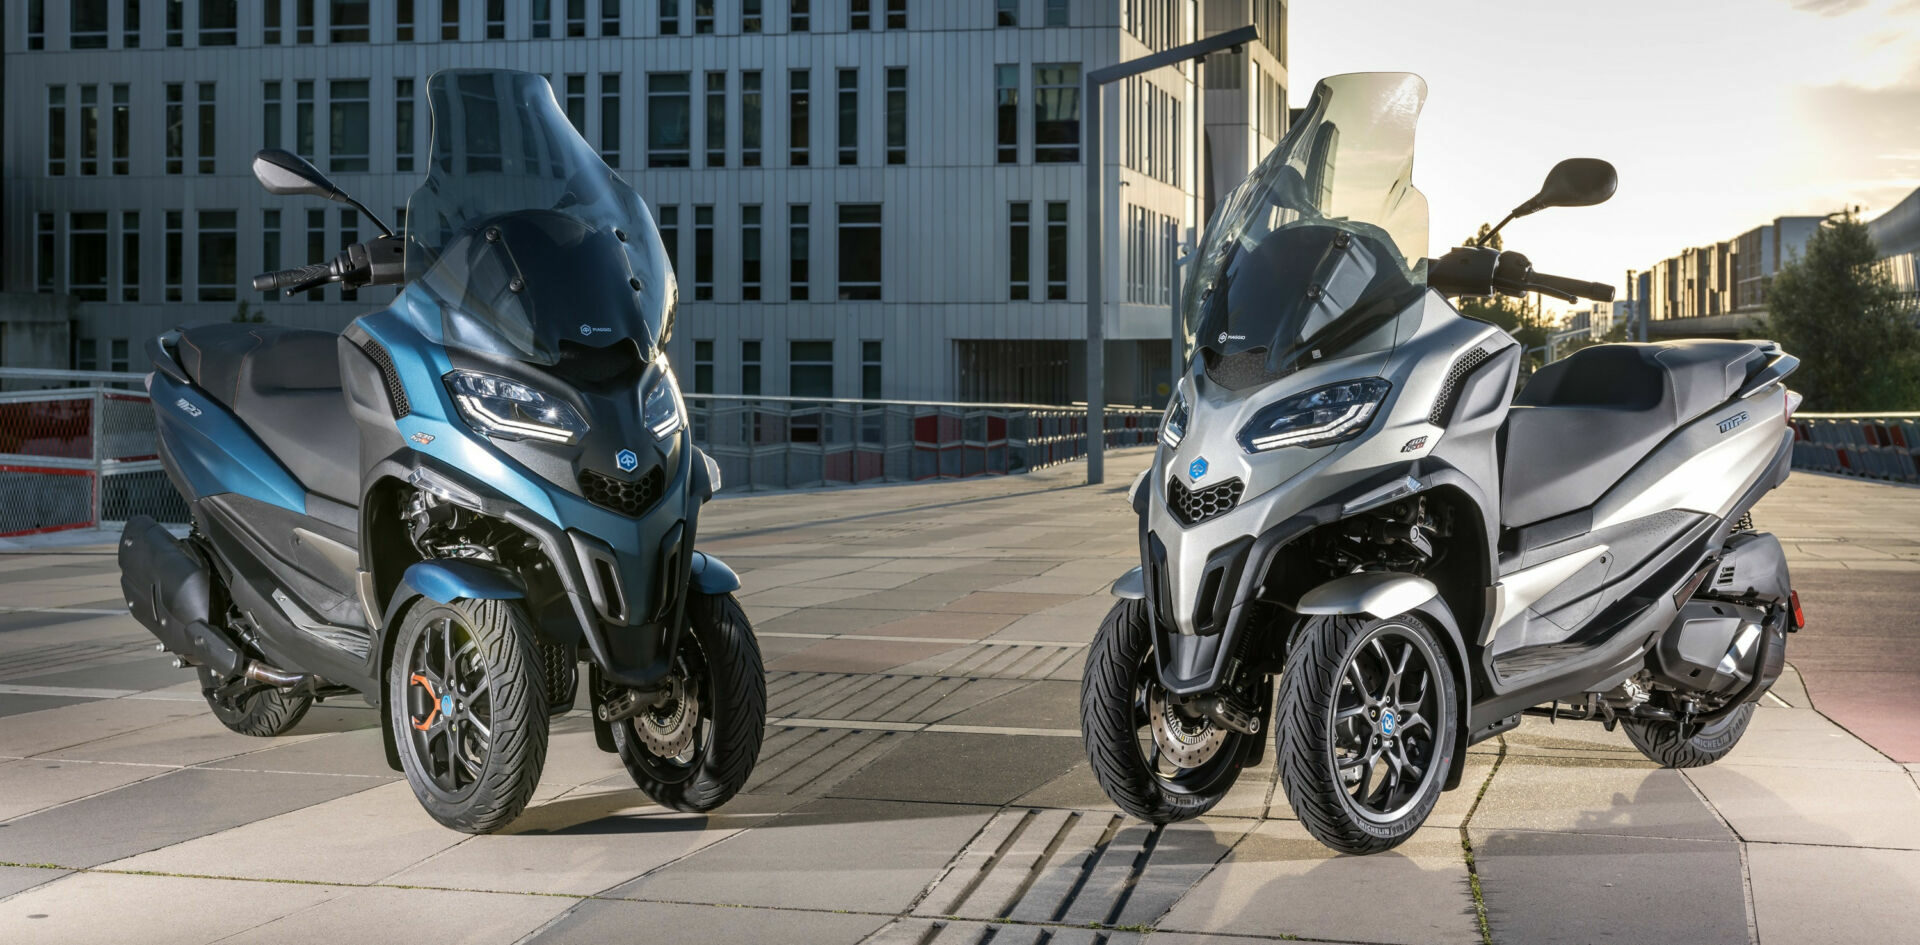 Verklaring Veroveren In zoomen Piaggio Unveils All-New MP3 Scooters - Roadracing World Magazine |  Motorcycle Riding, Racing & Tech News